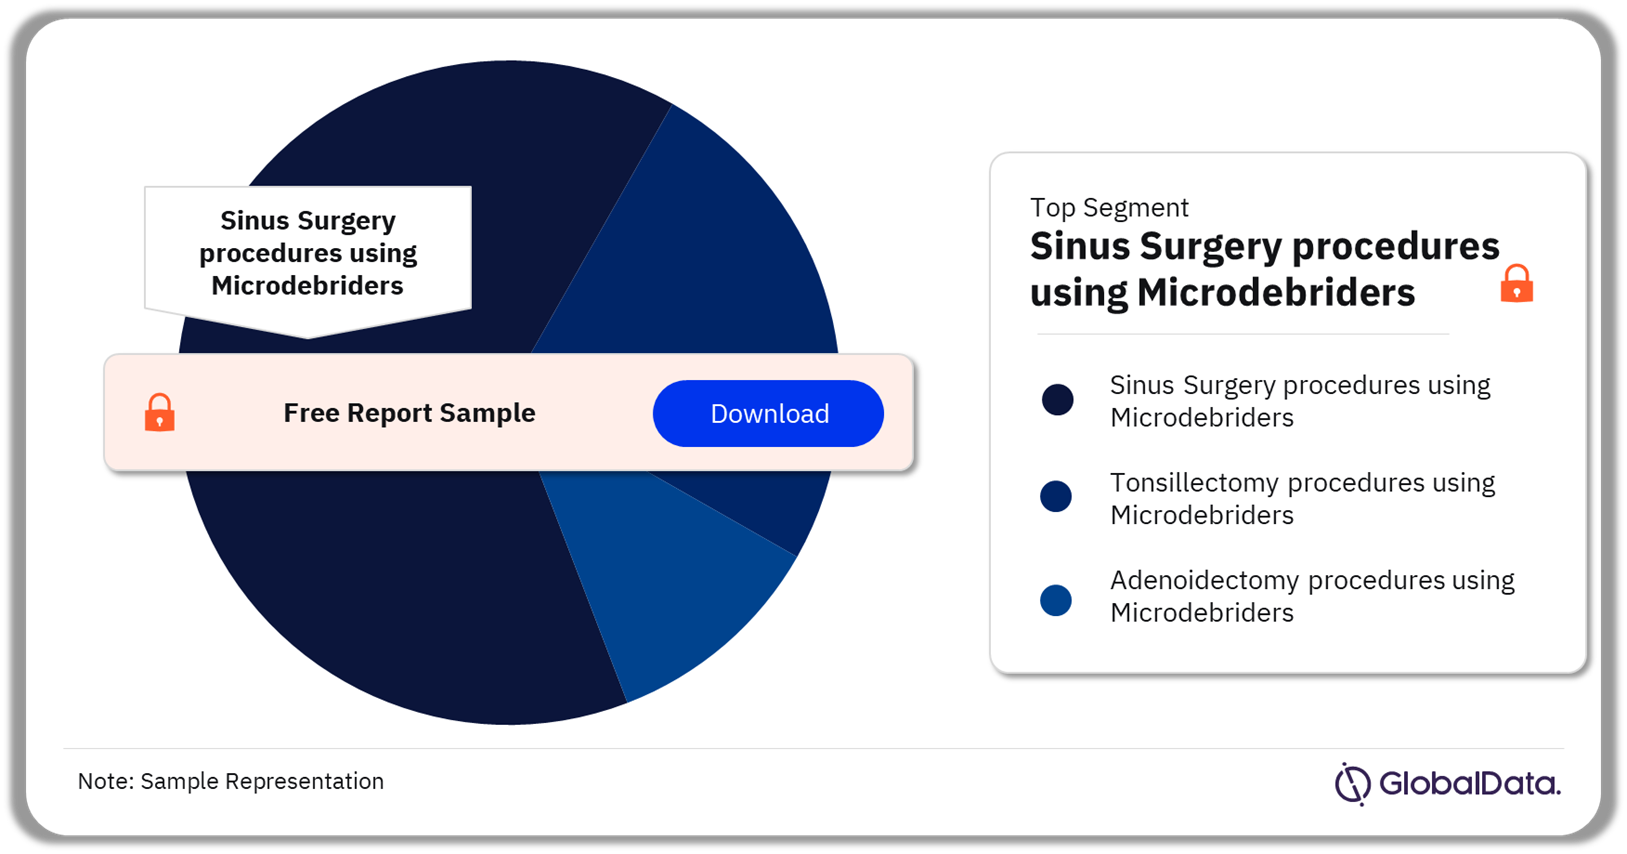 APAC Microdebriders Procedures Market Analysis by Segments, 2022 (%)